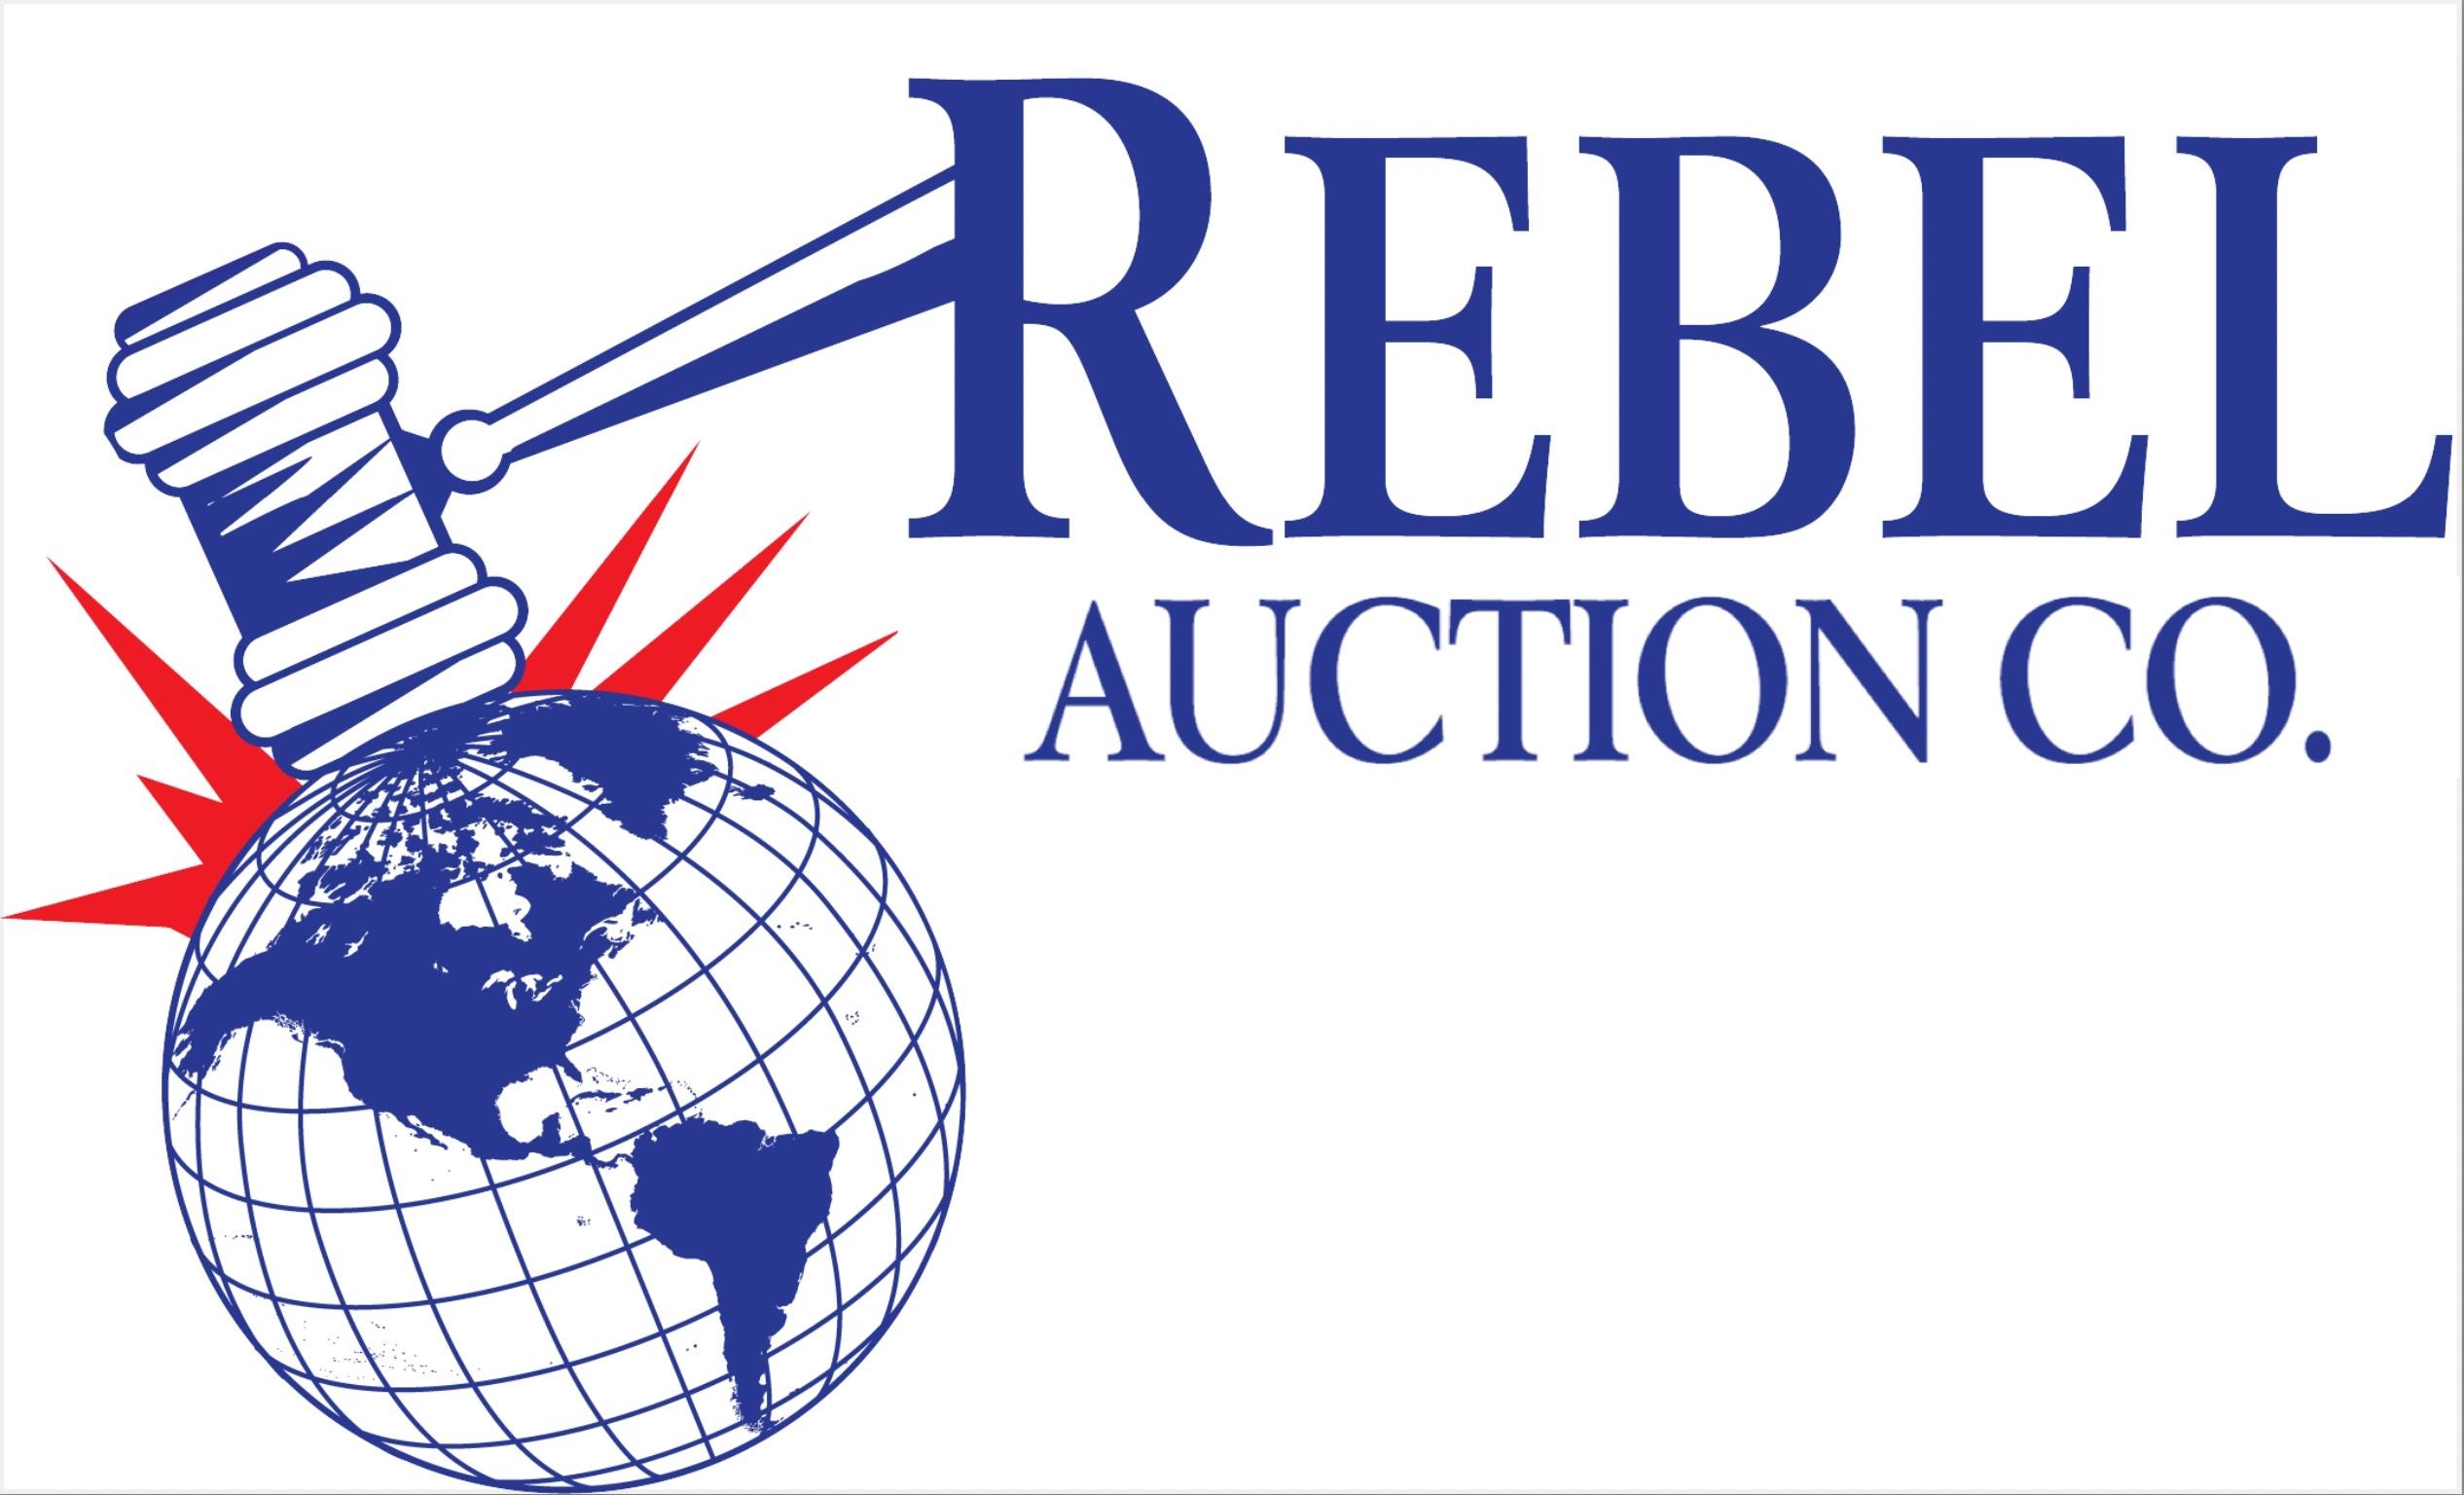 Rebel Auction Company